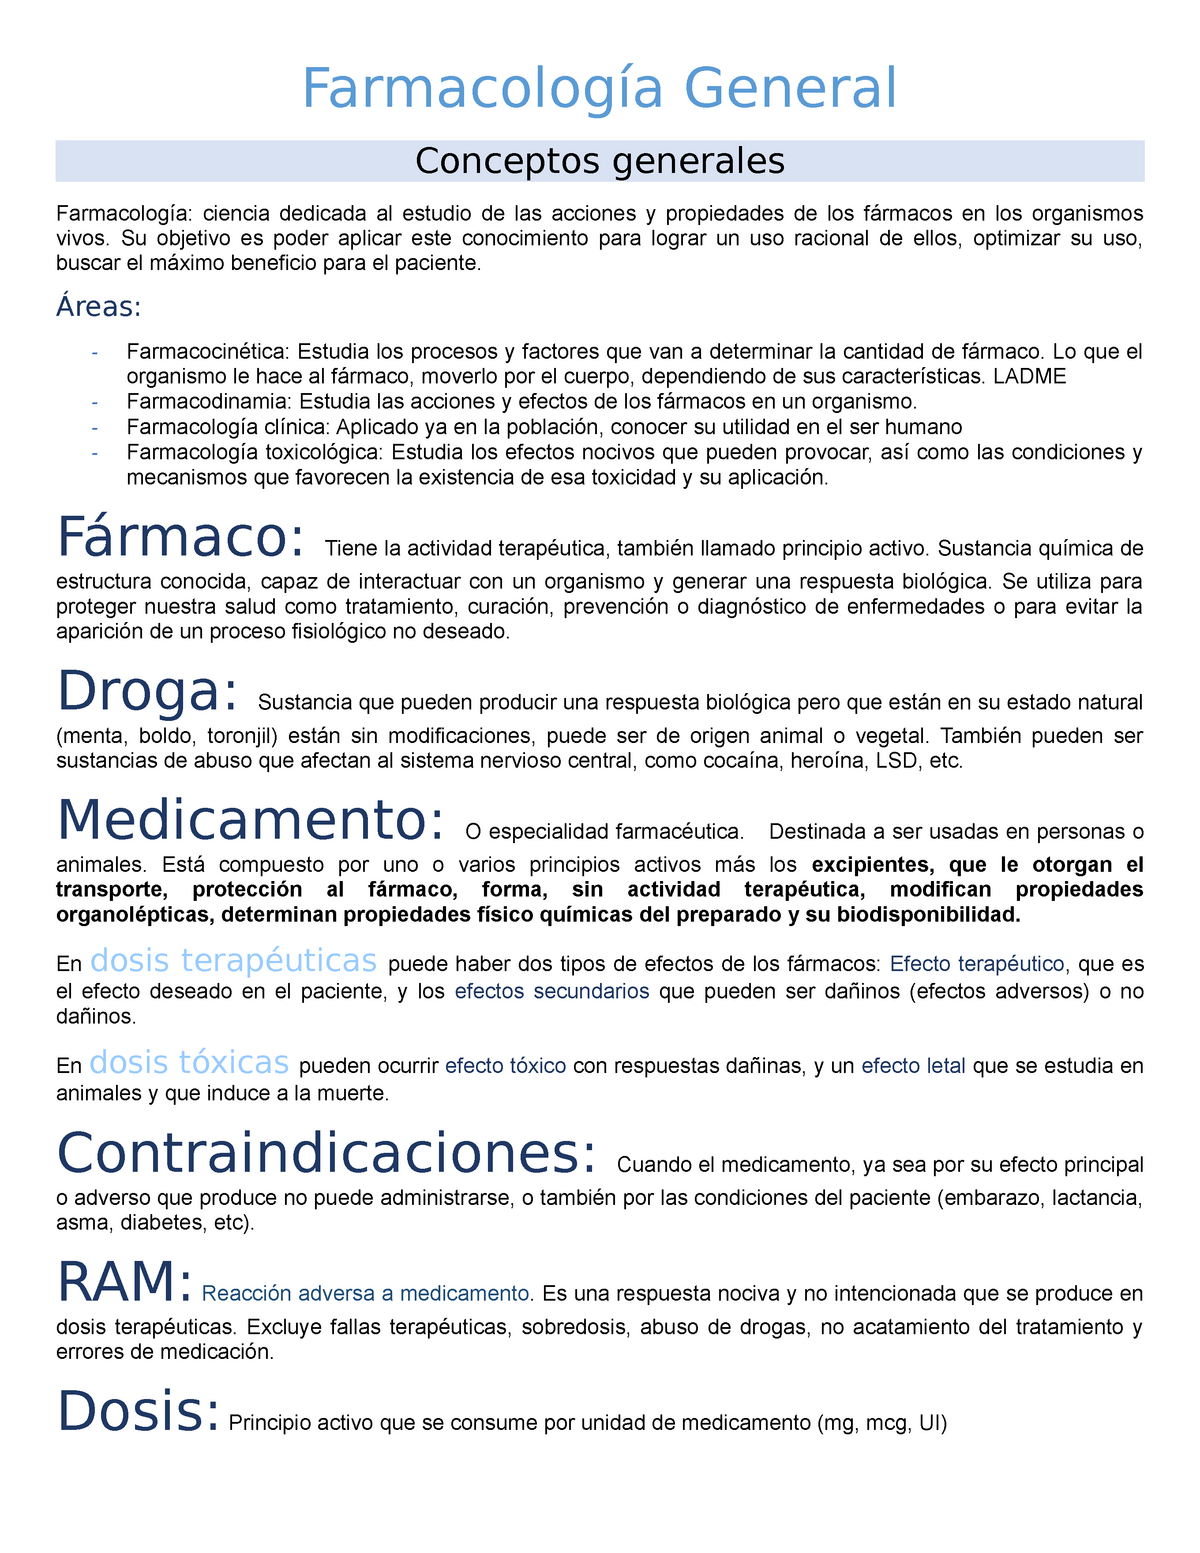 Farmacología General S1 - Farmacología General Conceptos generales ...